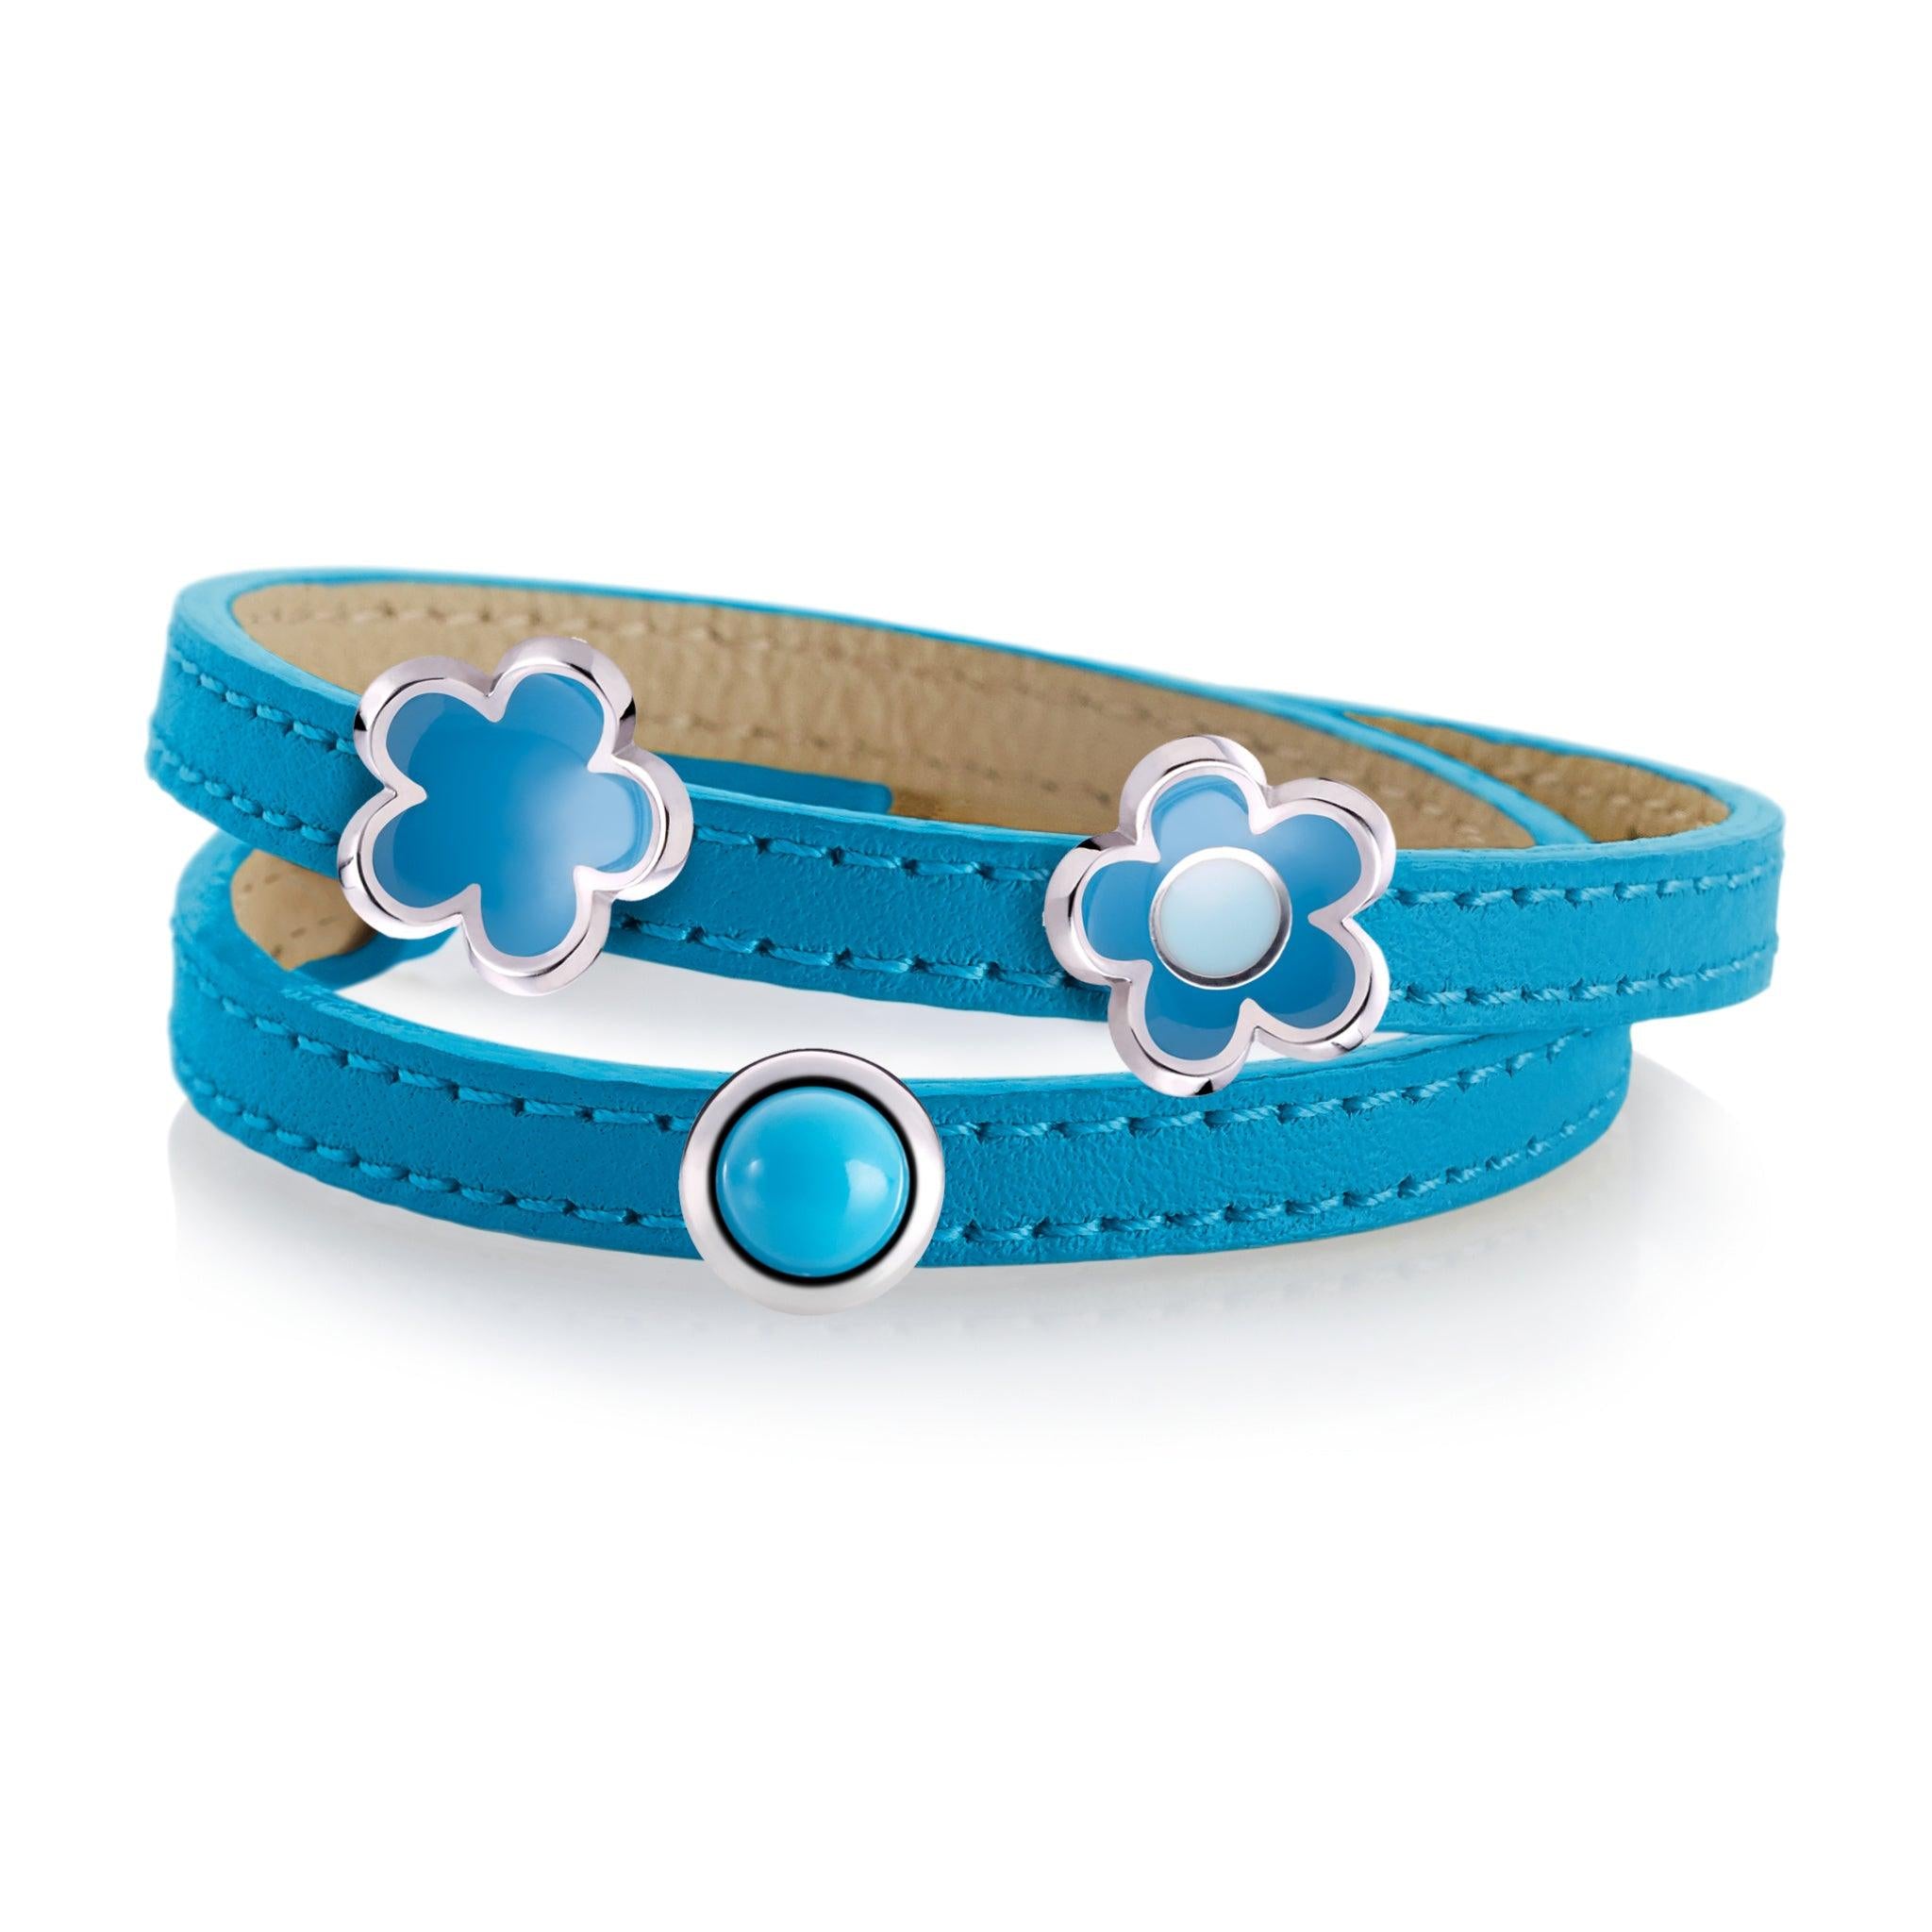 3er Set Flower uni, Flower bicolor und Loop (blau türkis) - 1Karat